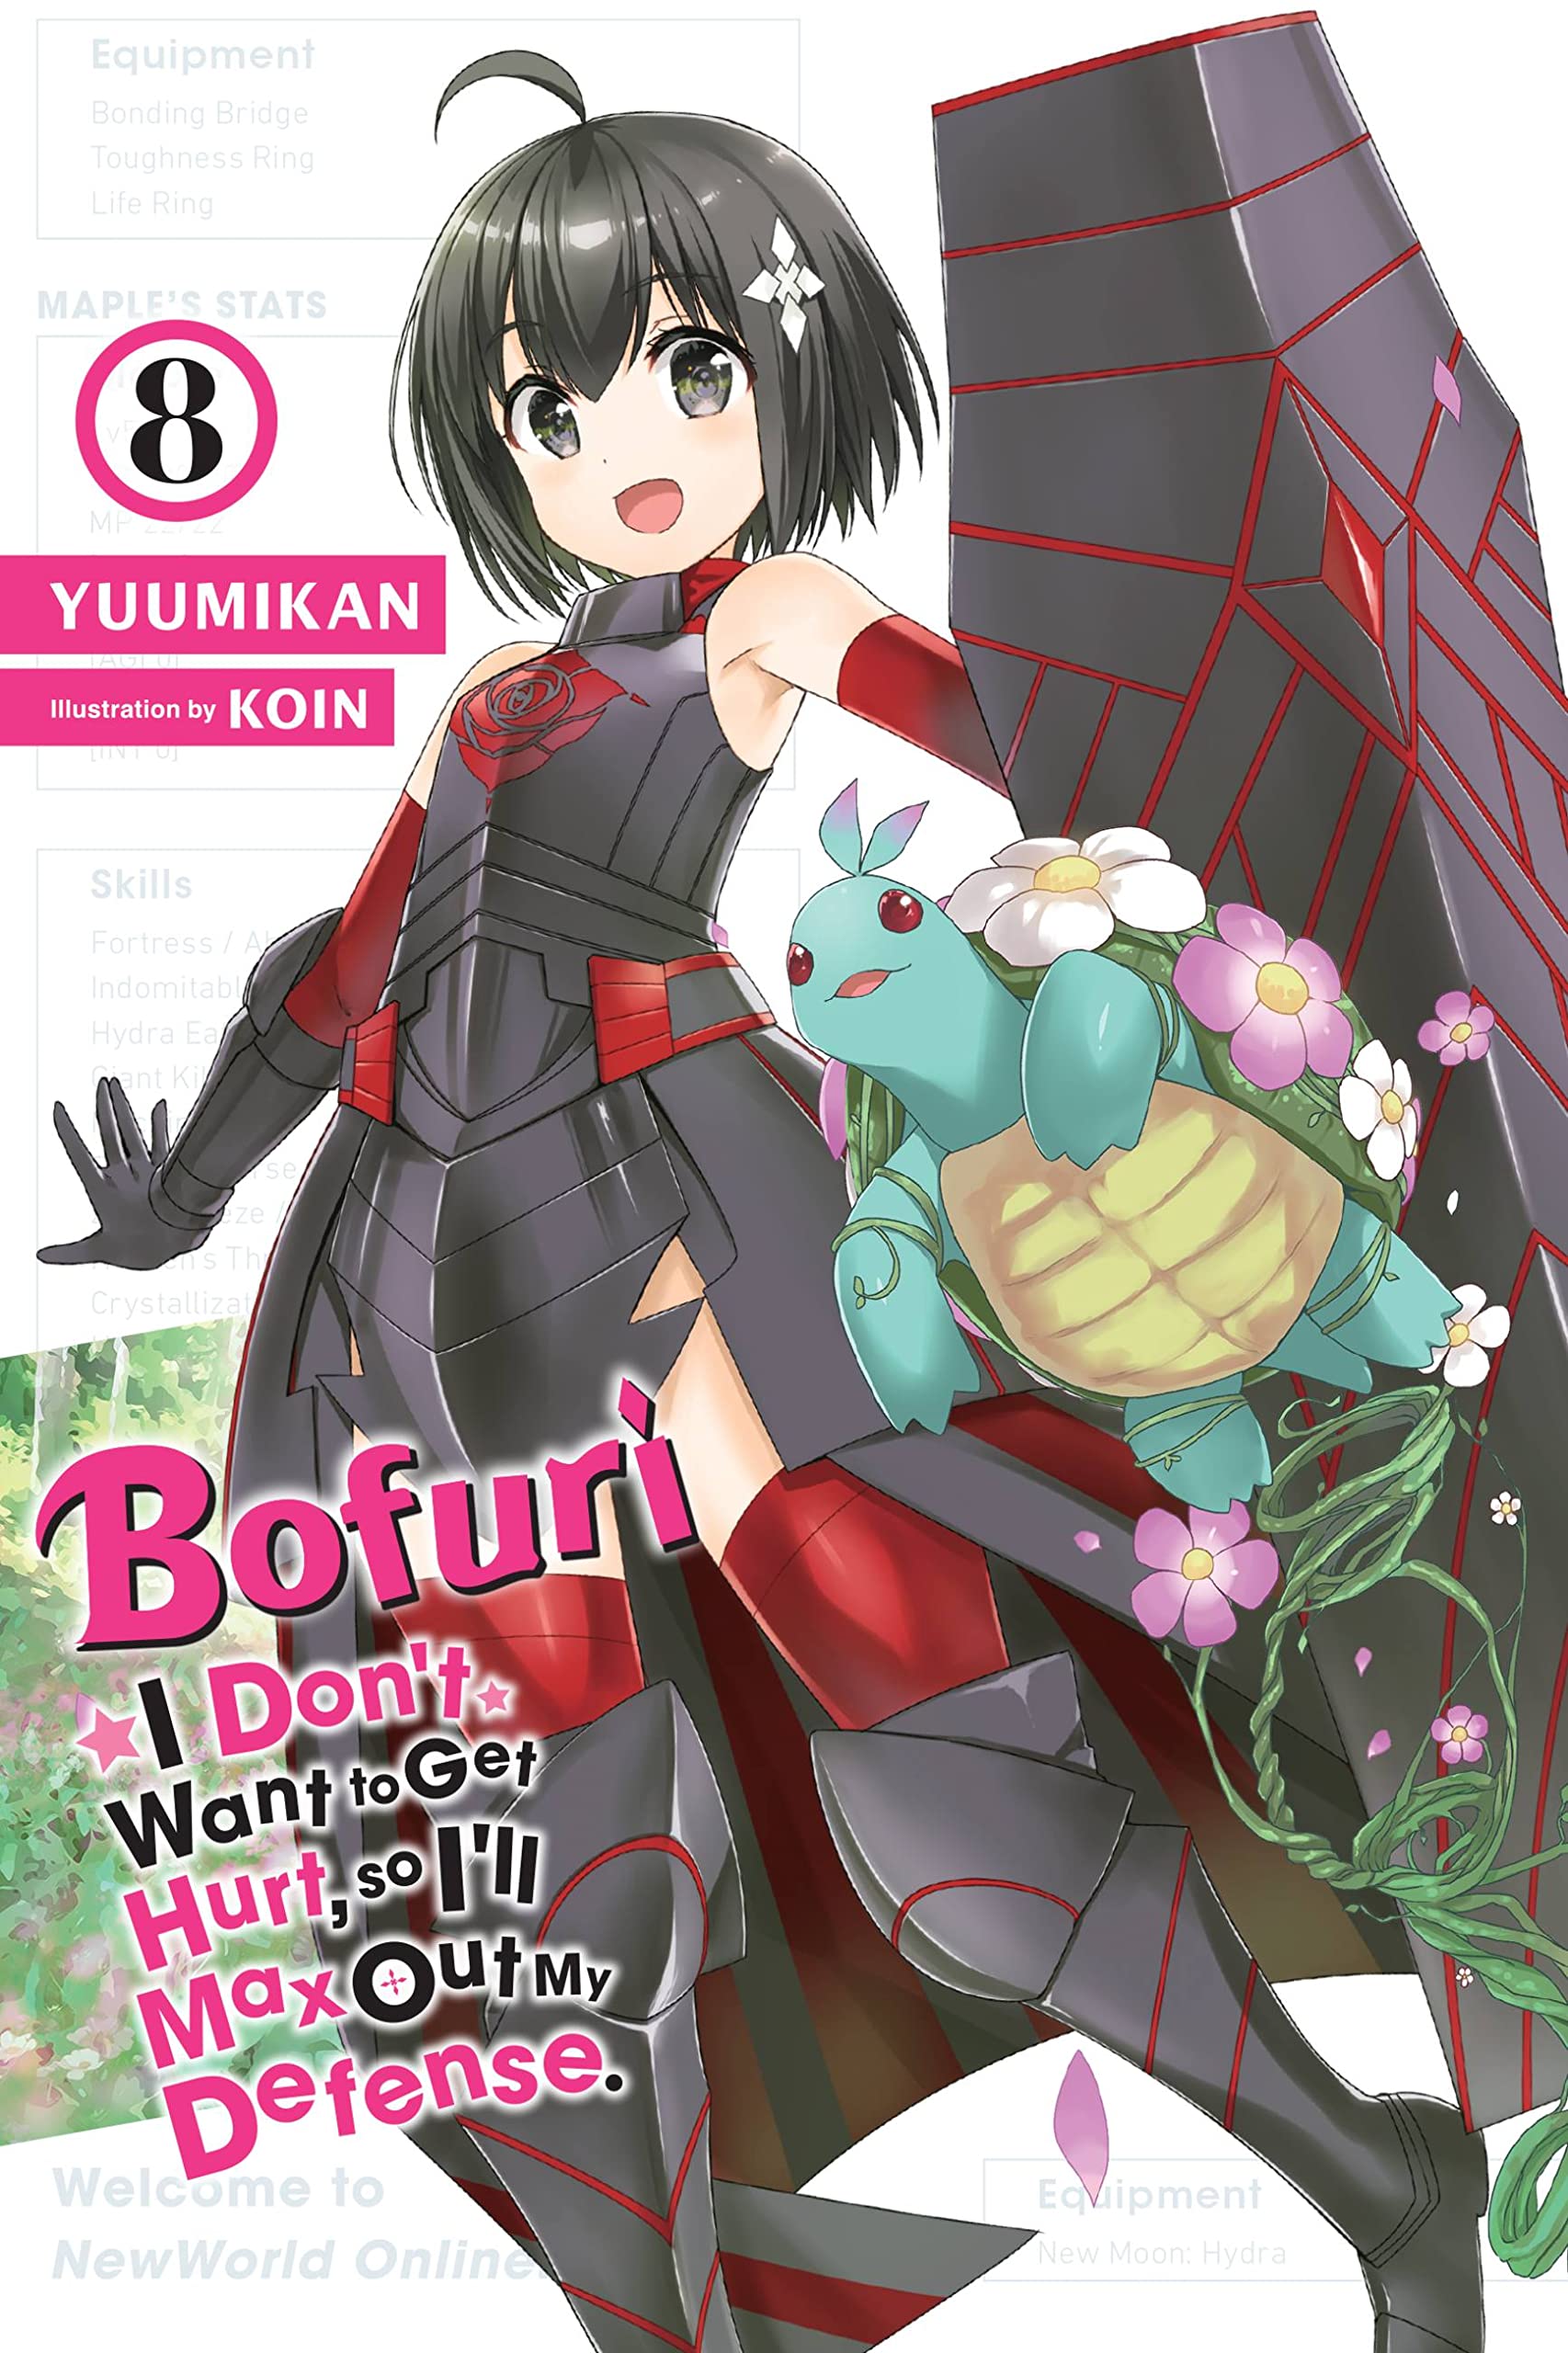 Bofuri: I Don't Want to Get Hurt, So I'll Max Out My Defense. Vol. 08 (Light Novel)